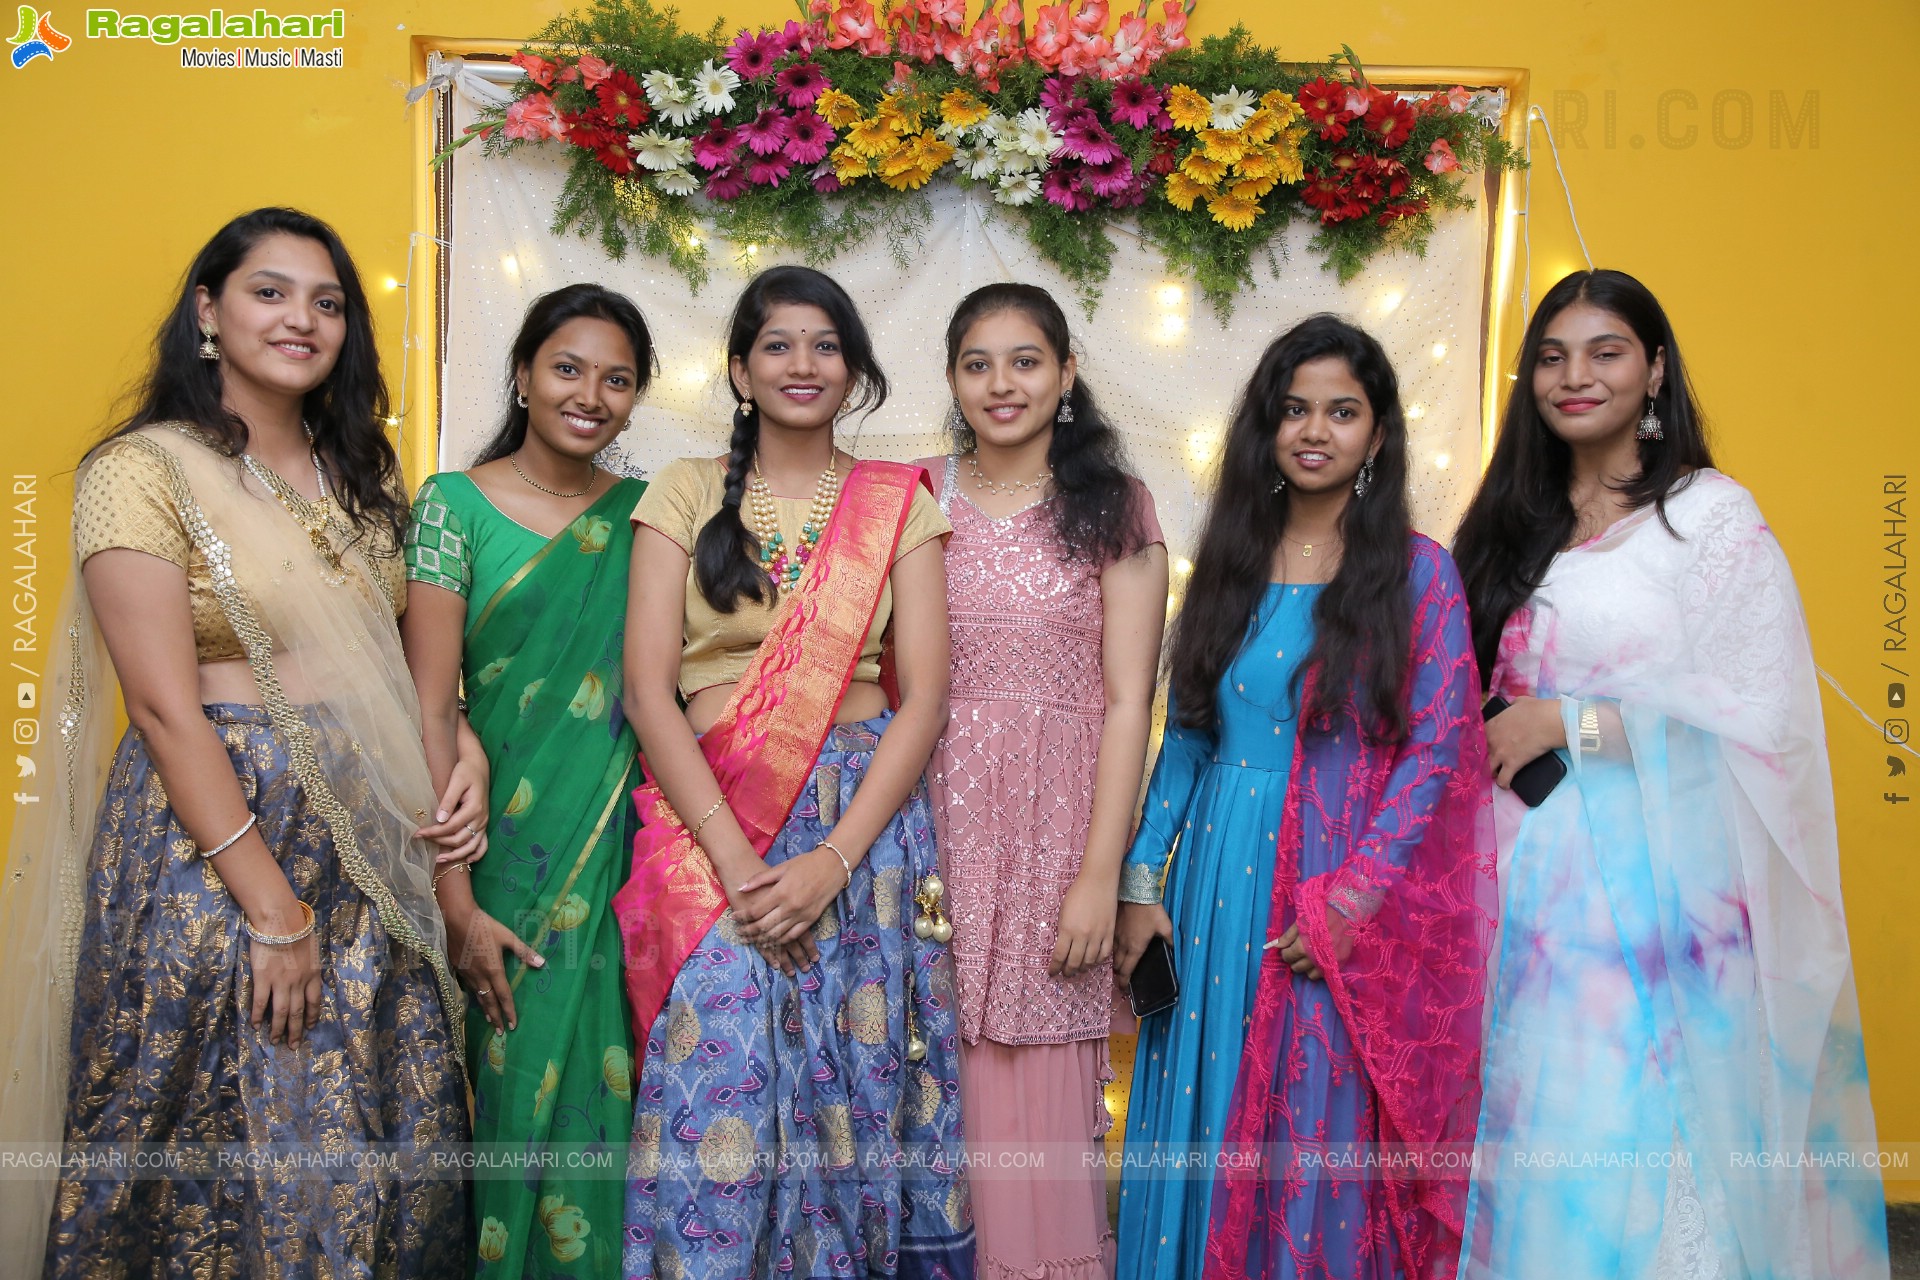 Lakhotia College Of Fashion Design Celebrates The Ethnic Day 2022 at Banjara Hills Campus, Hyderabad